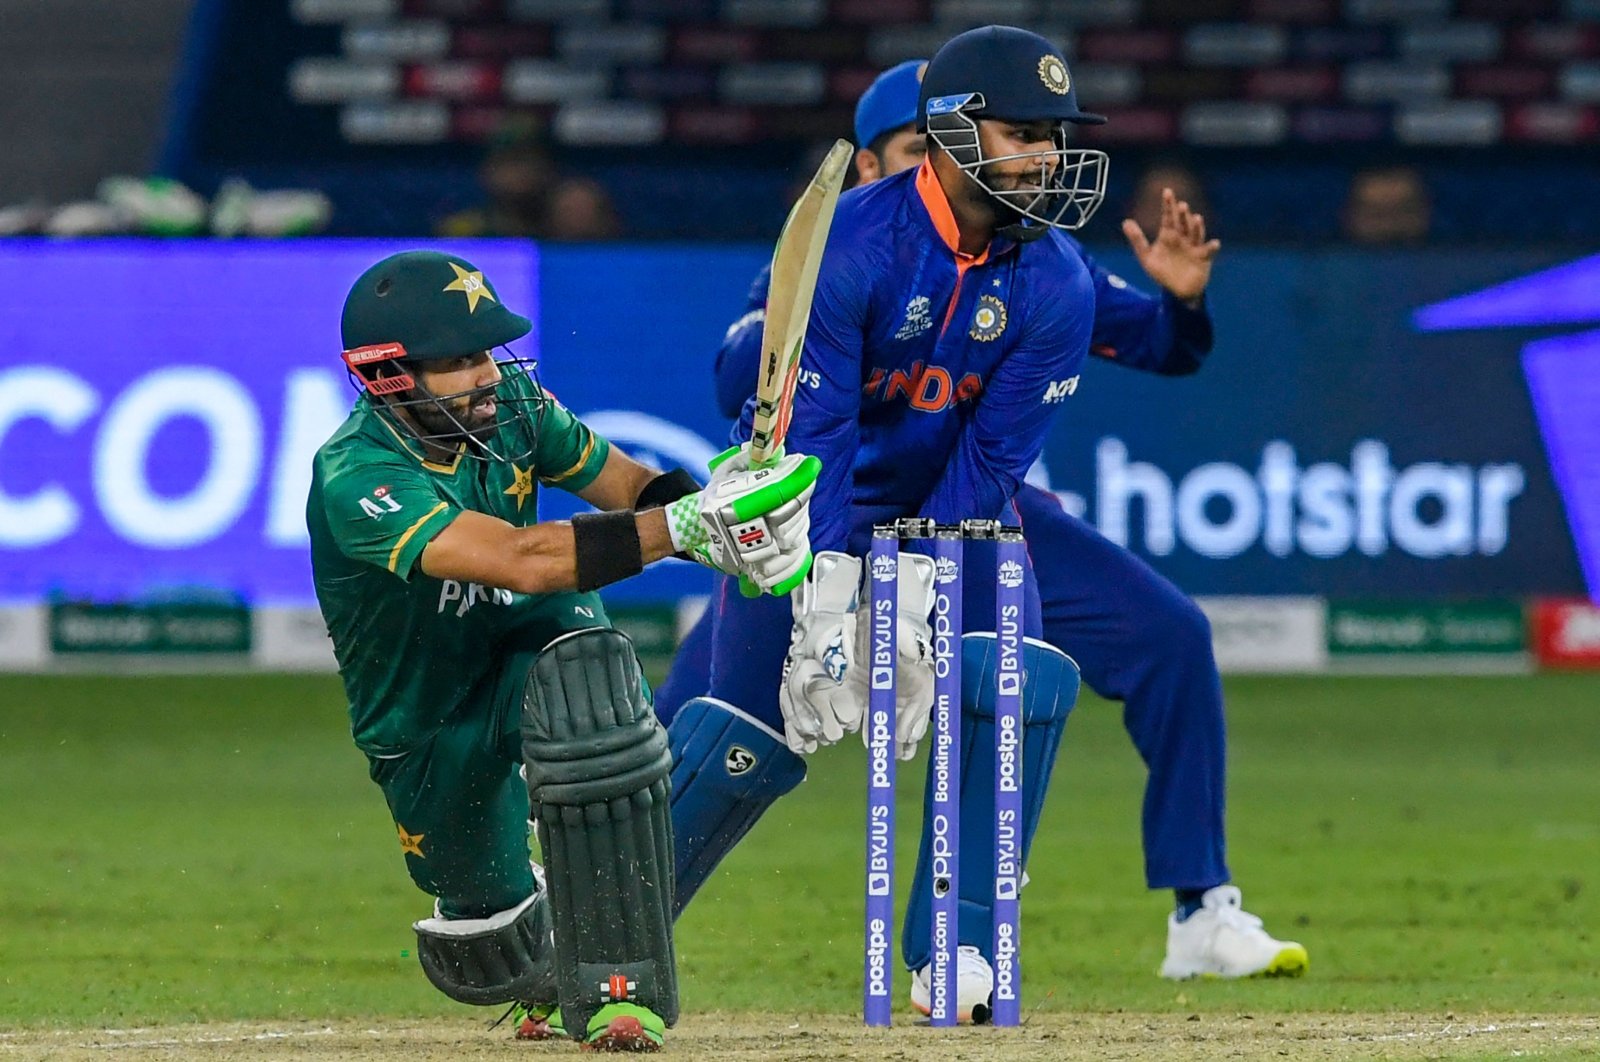 Pakistan's Mohammad Rizwan (L) plays a shot during the ICC men's Twenty20 World Cup match against India at the Dubai International Cricket Stadium in Dubai, United Arab Emirates, Oct. 24, 2021. (AFP Photo)